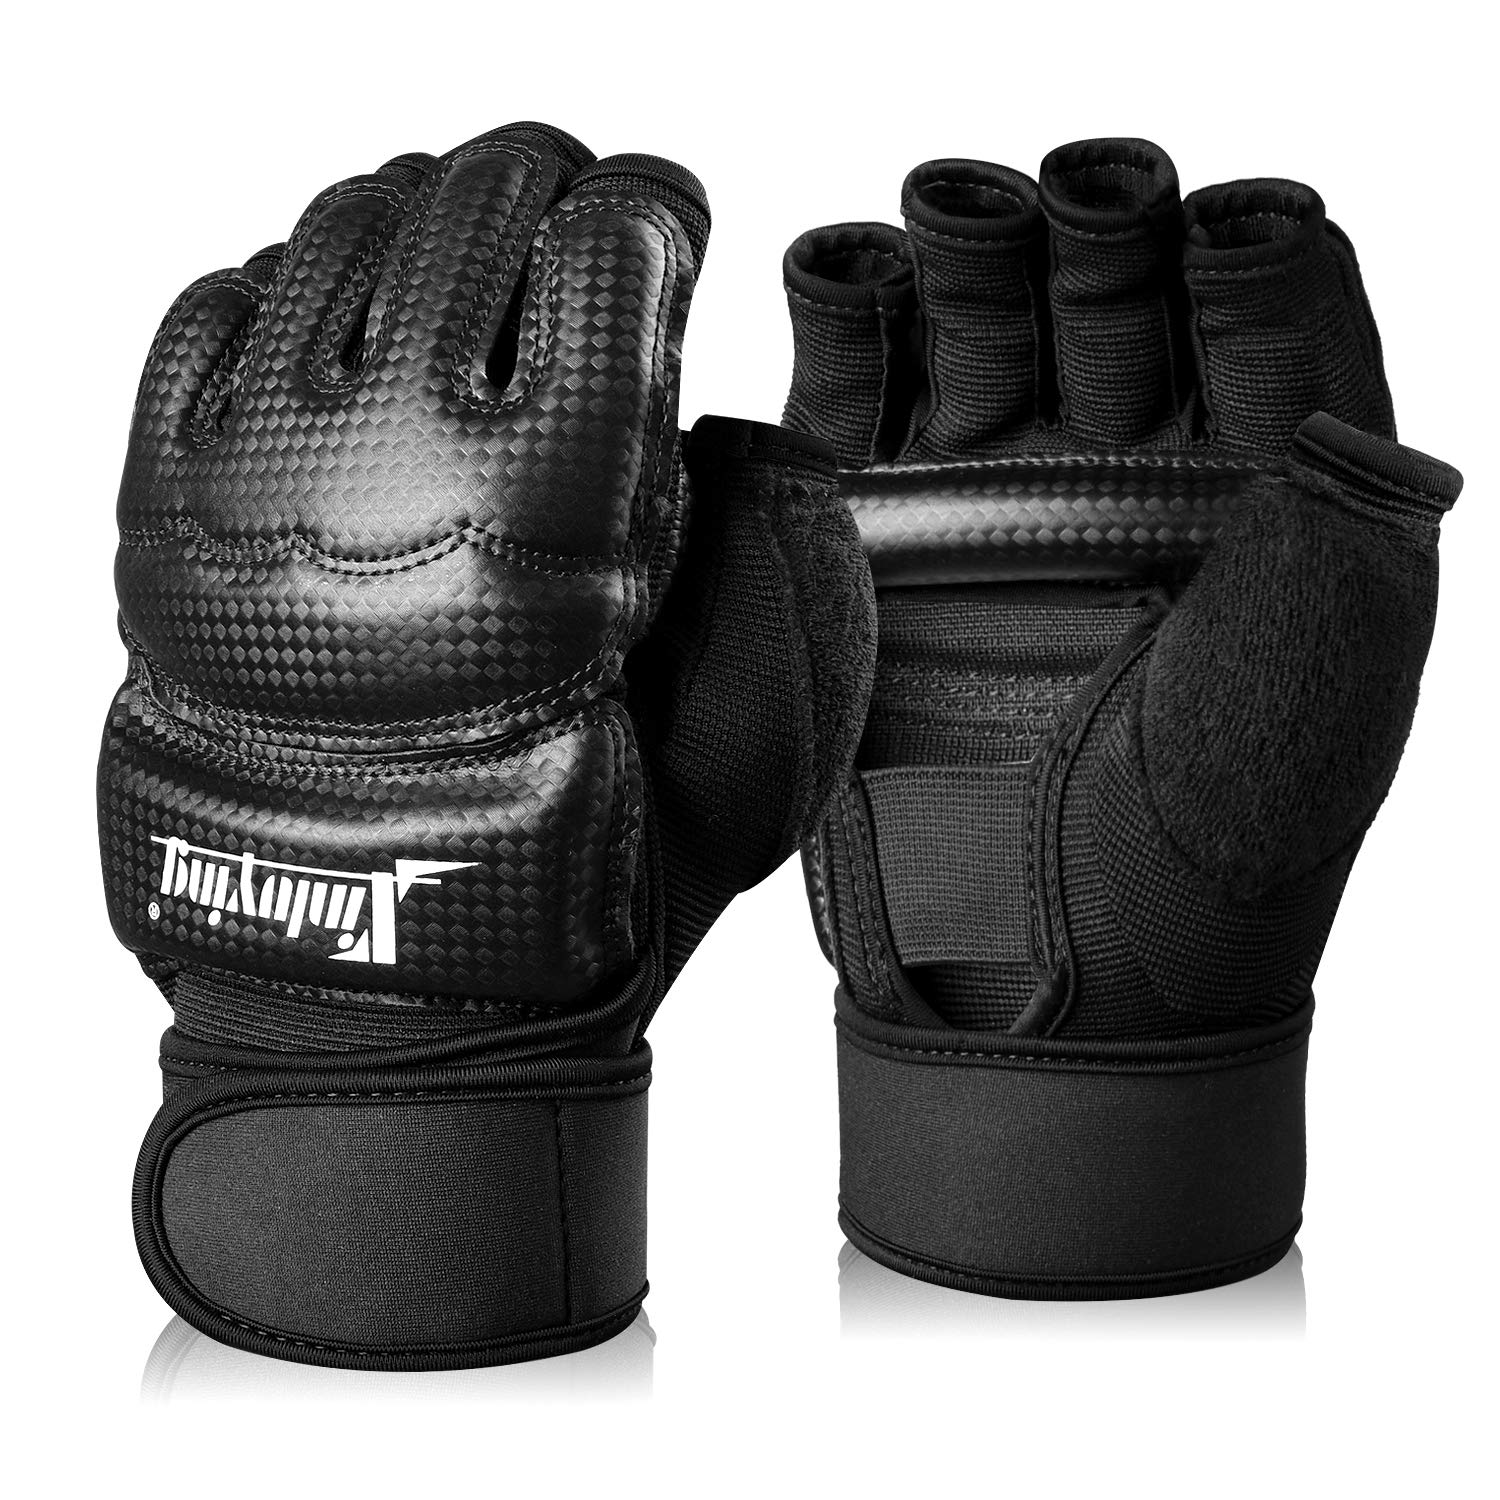 Xinluying Punch Bag Boxing Martial Arts Mma Sparring Grappling Muay Thai Taekwondo Training Pu Leather Wrist Wraps Gloves Black